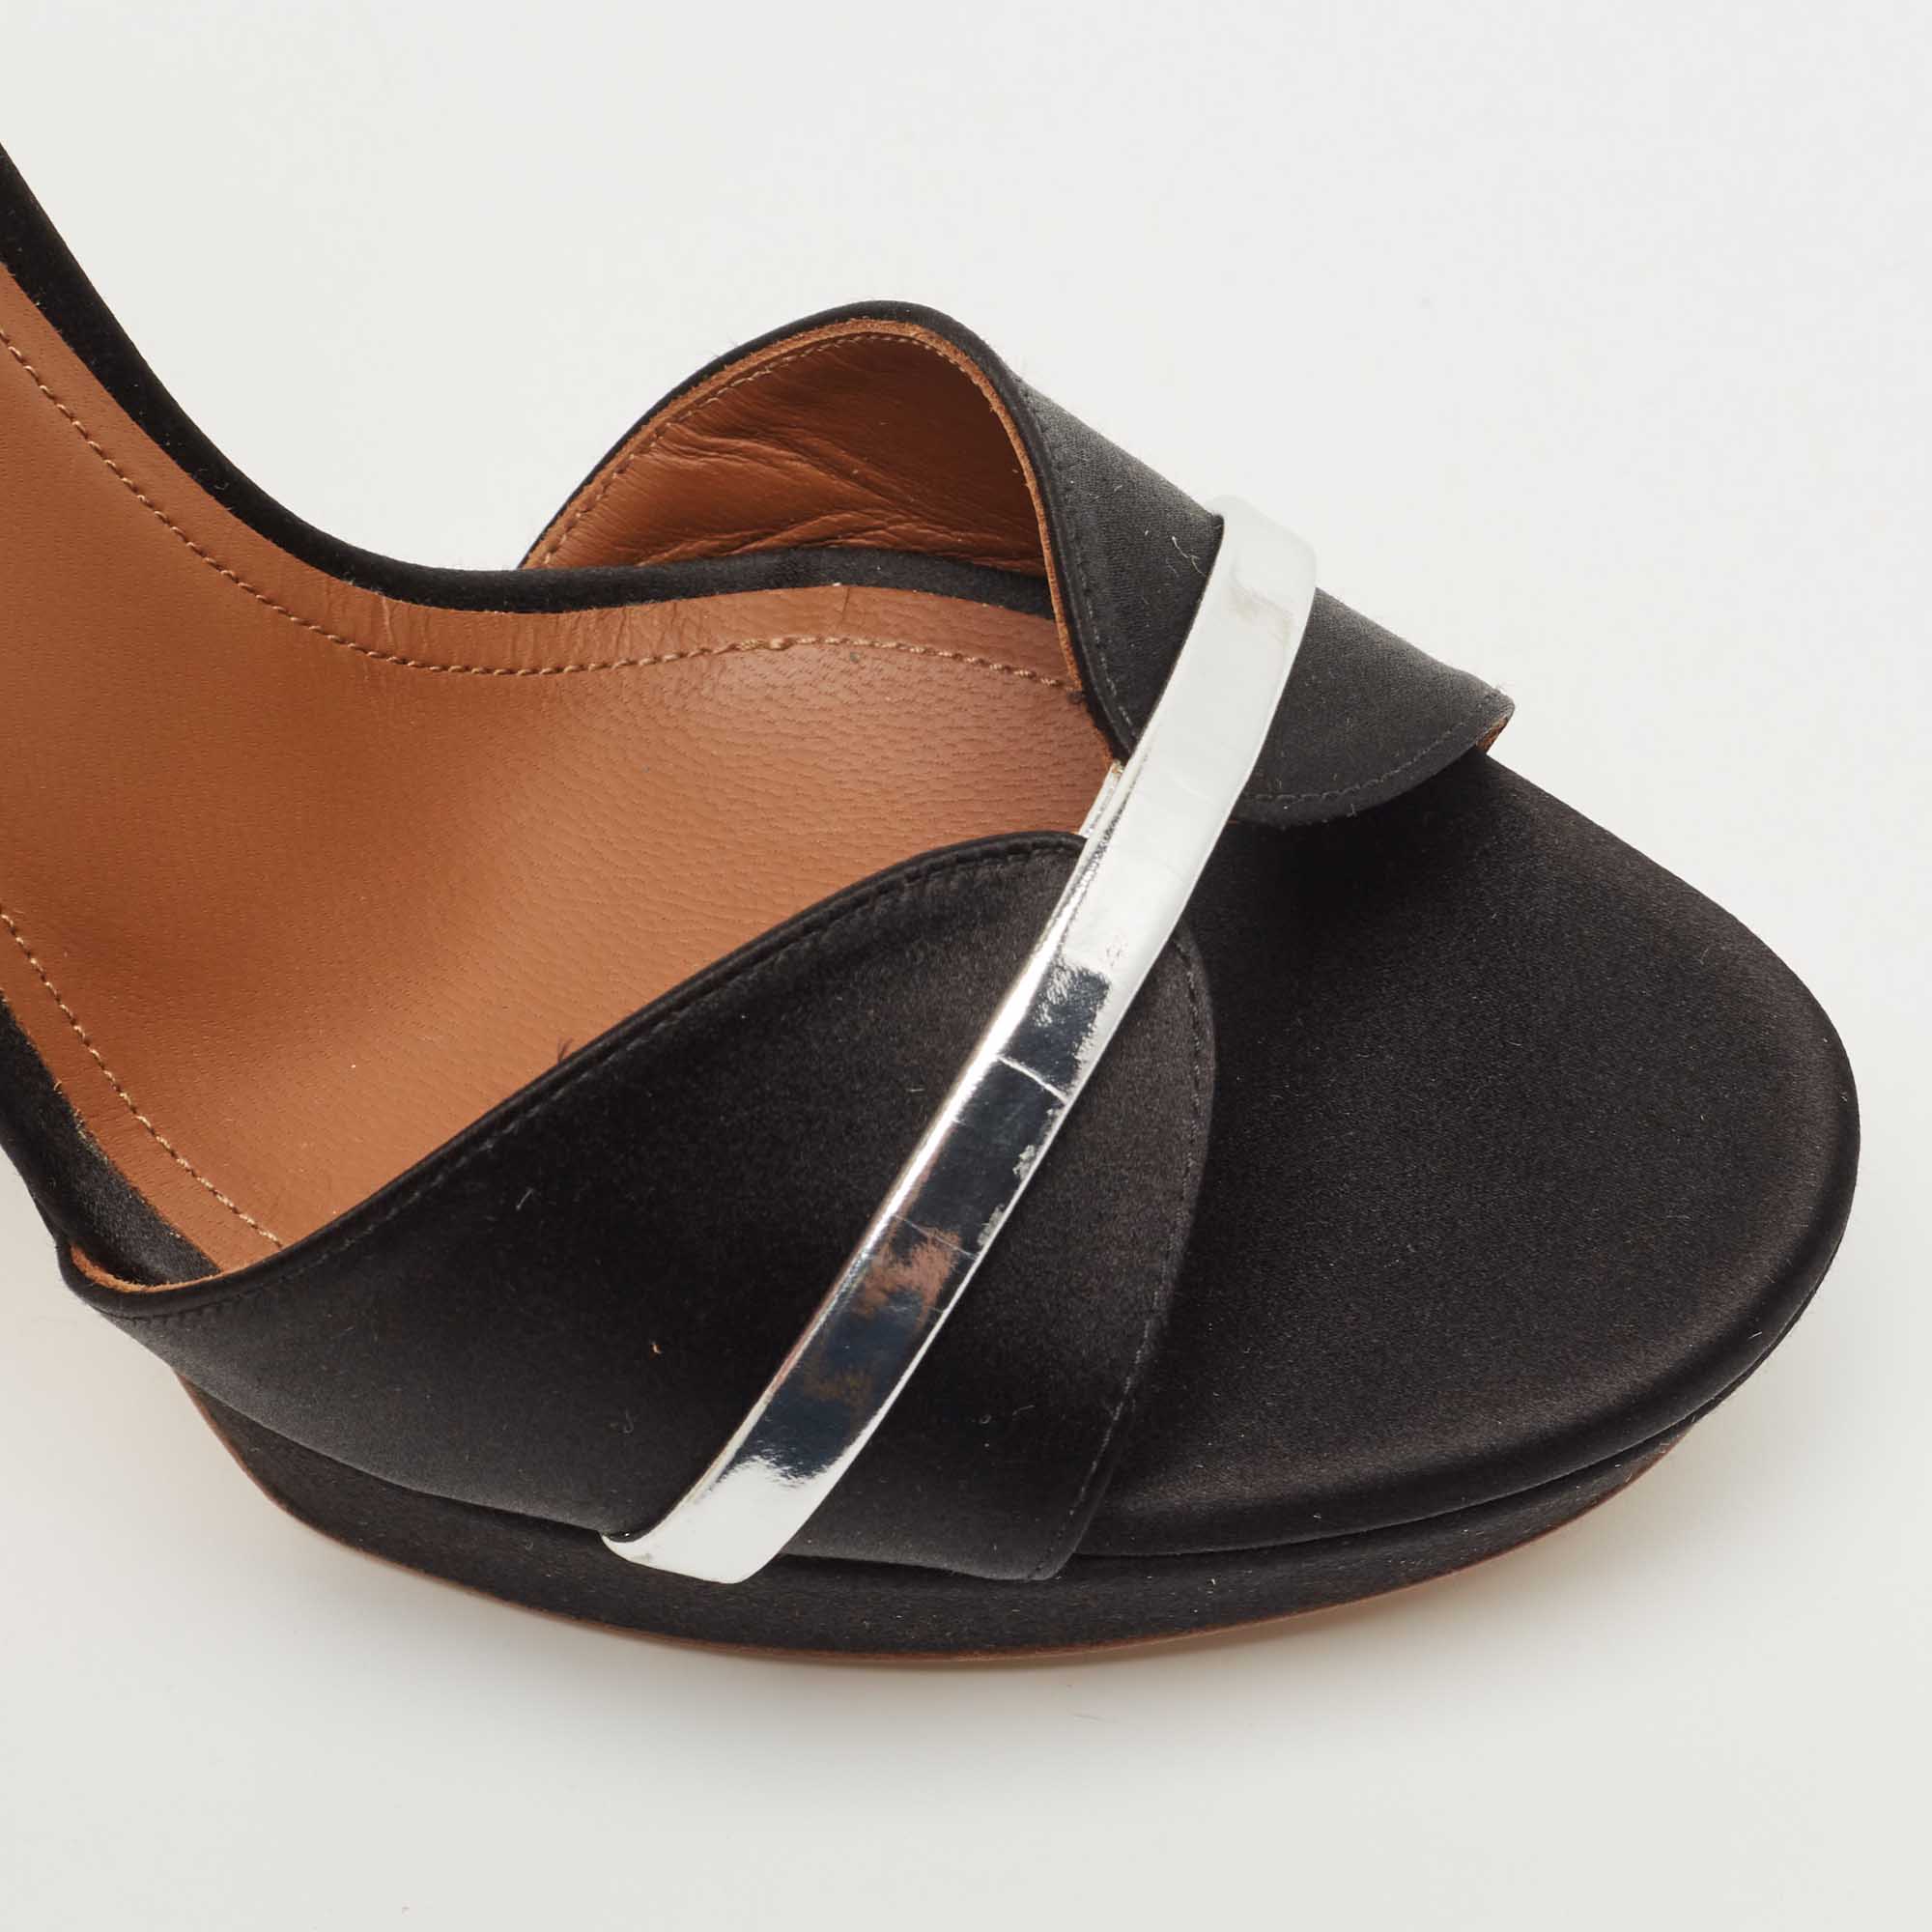 Malone Souliers Black Leather Miranda Platform Ankle Strap Sandals Size 39.5